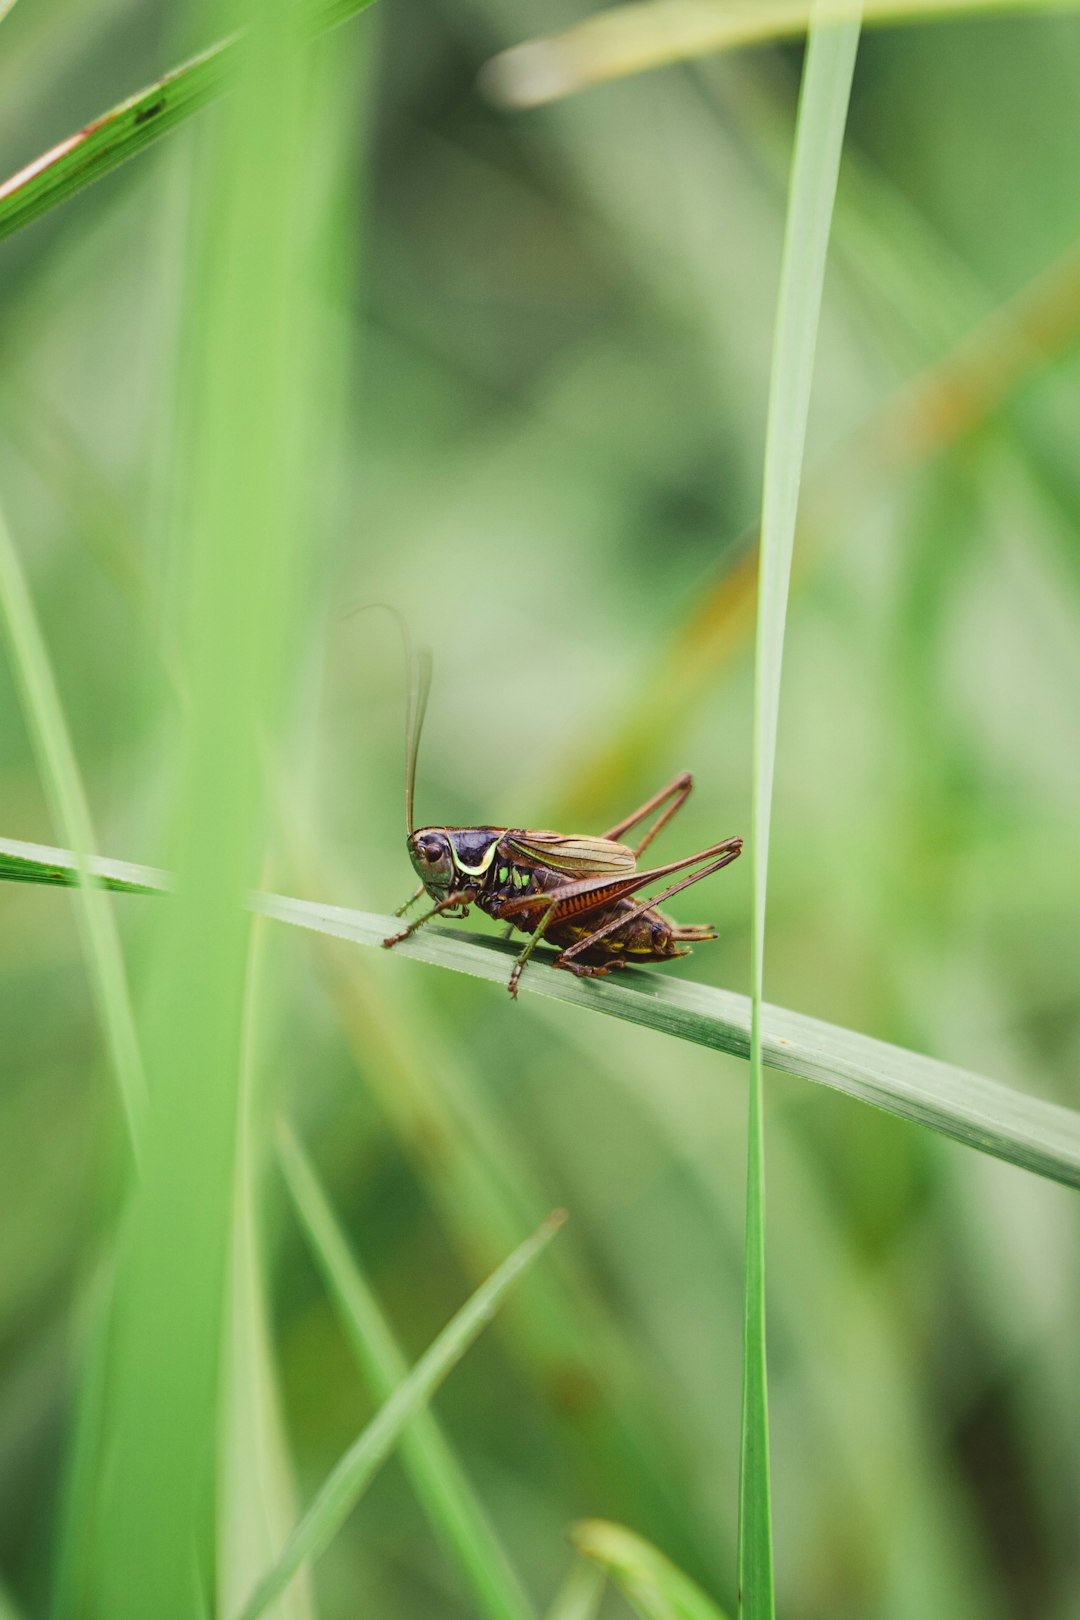 brown grasshopper on green grass during daytime